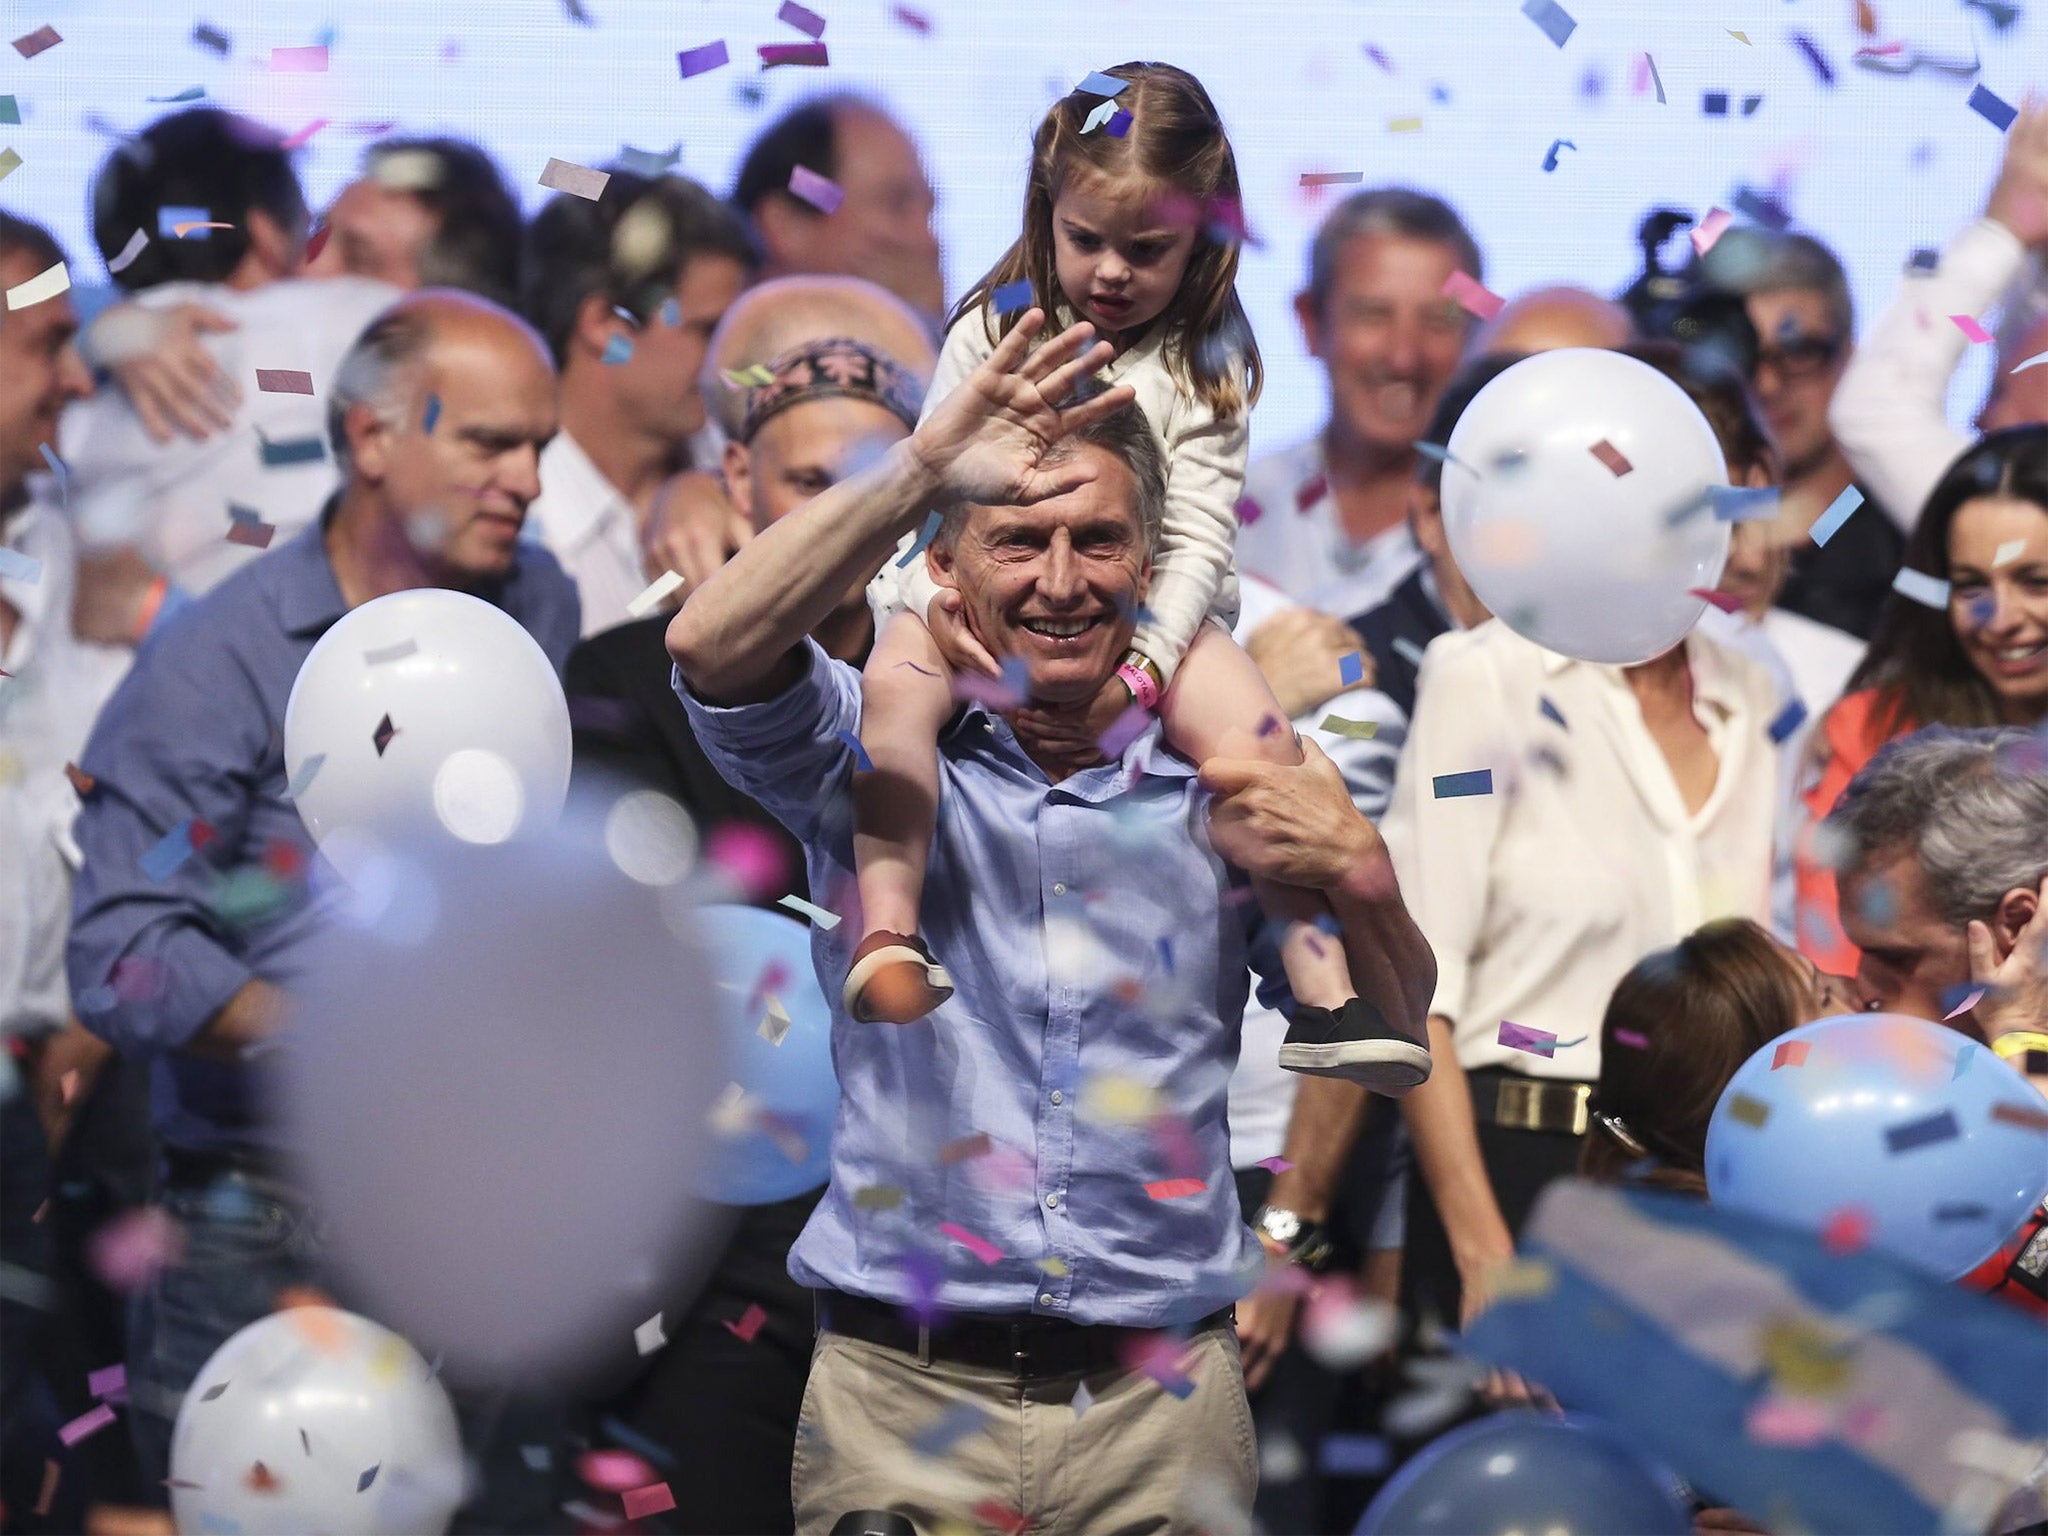 &#13;
Mauricio Macri celebrates winning last month's election &#13;